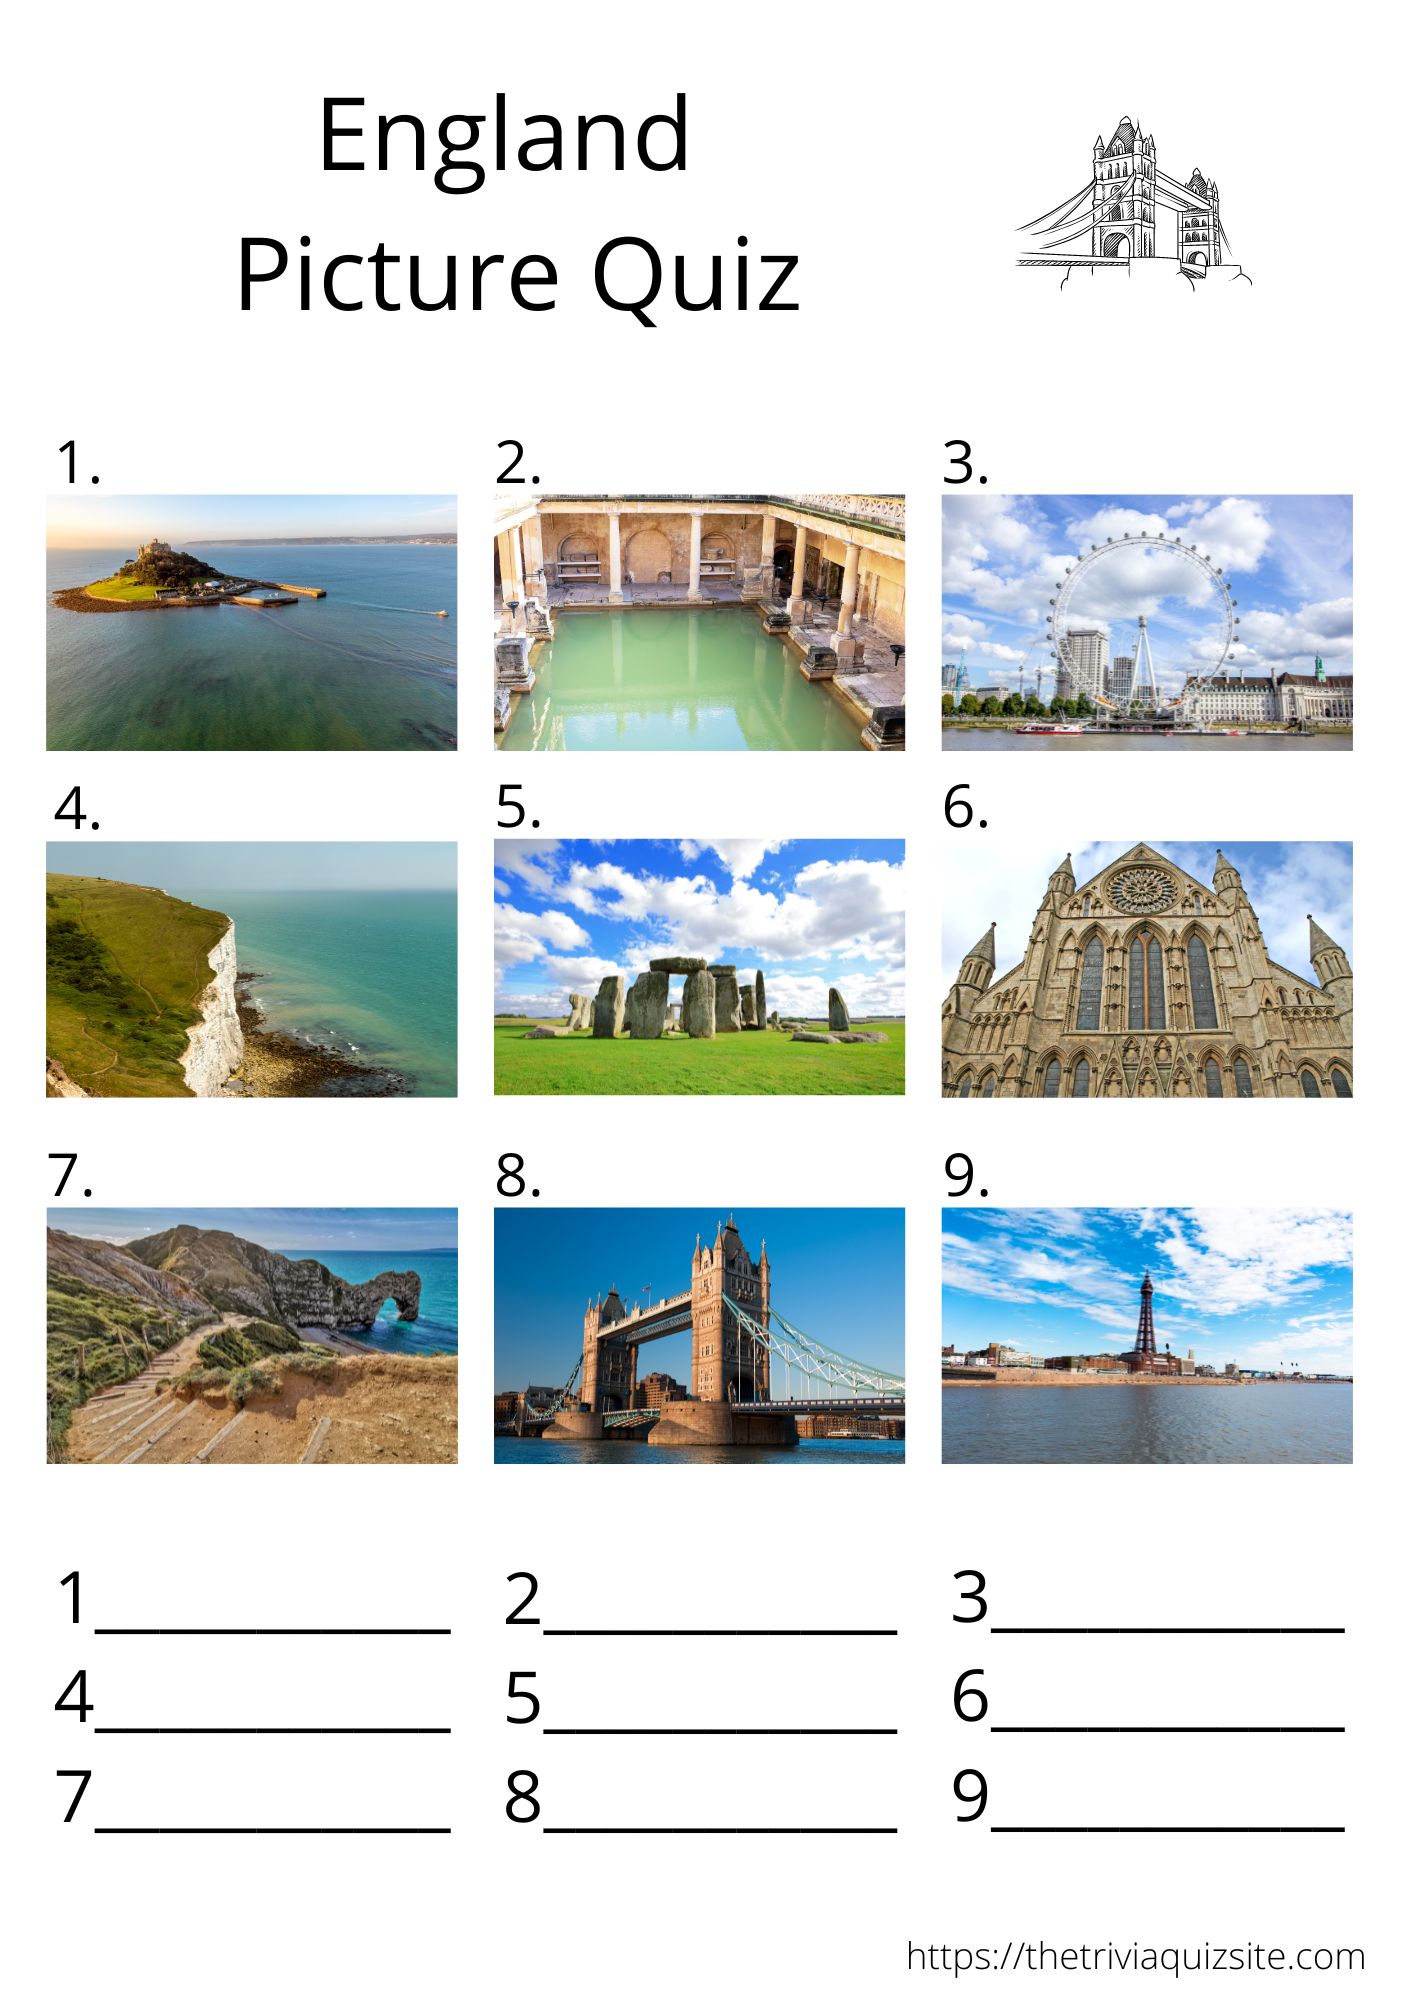 England Picture quiz